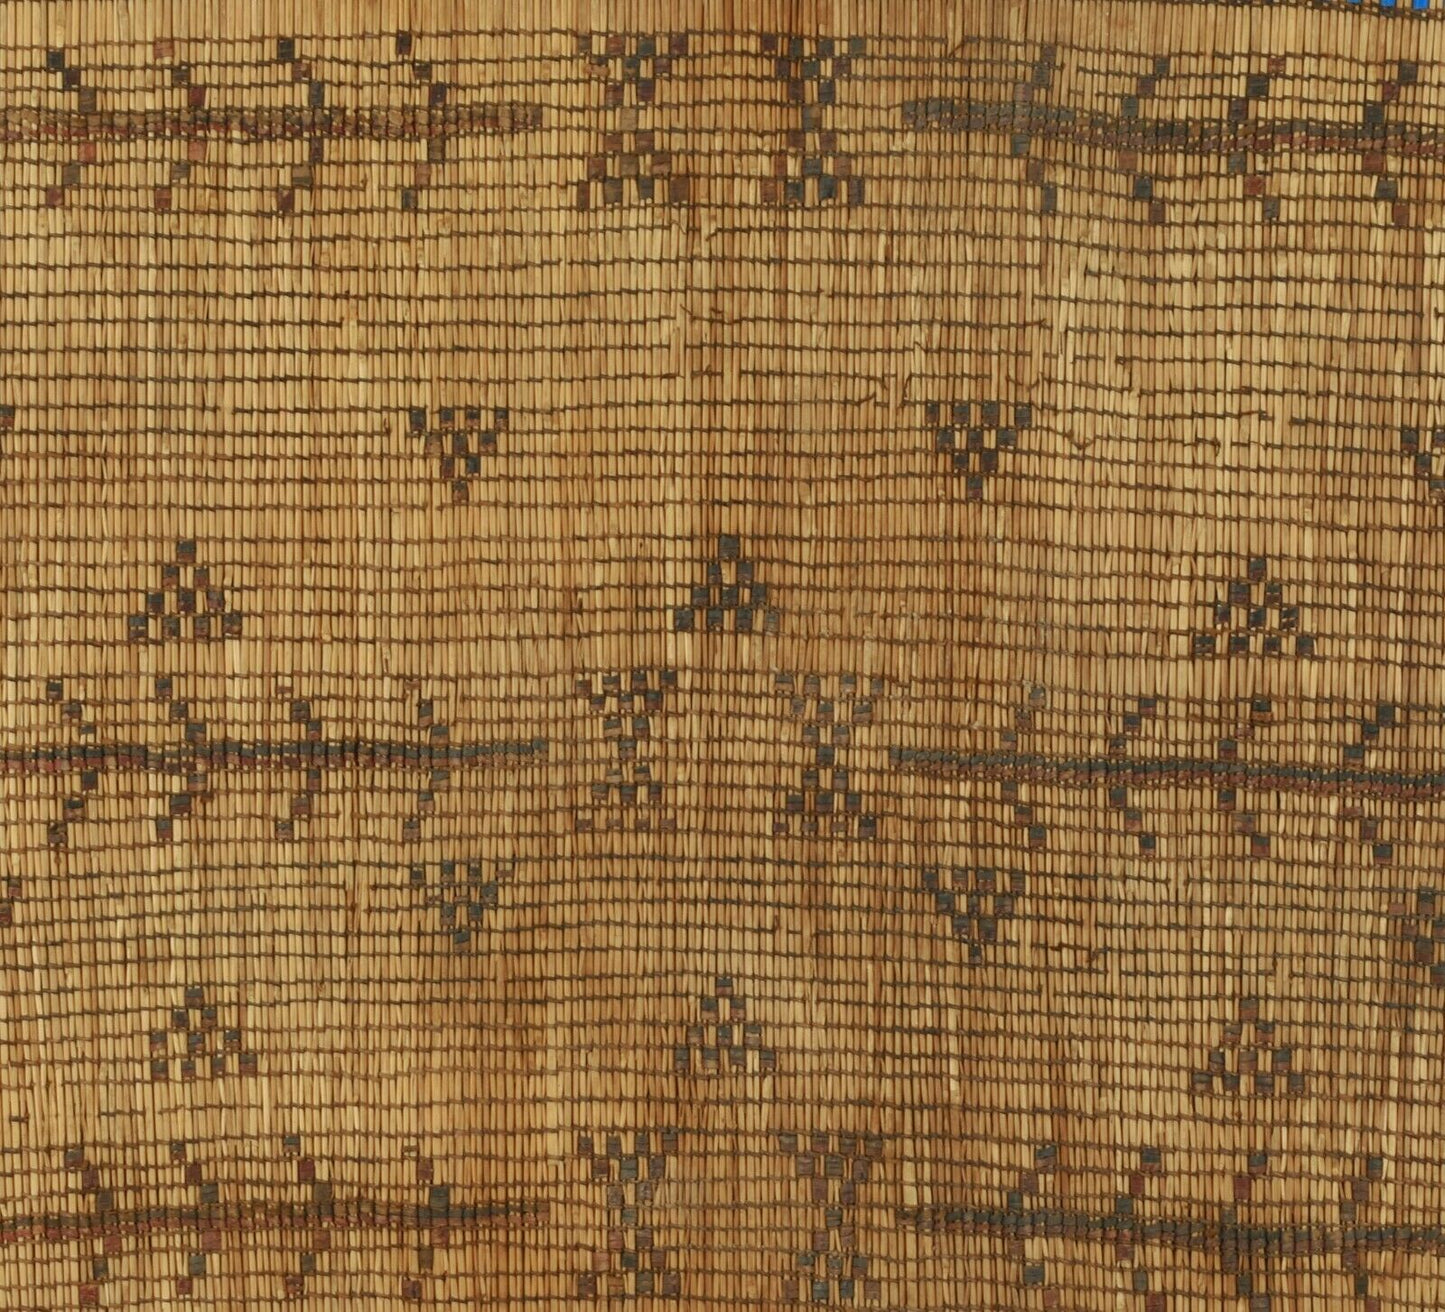 Old African Tuareg Art woven straw leather carpet mat Niger Mali Sahara desert - Tribalgh